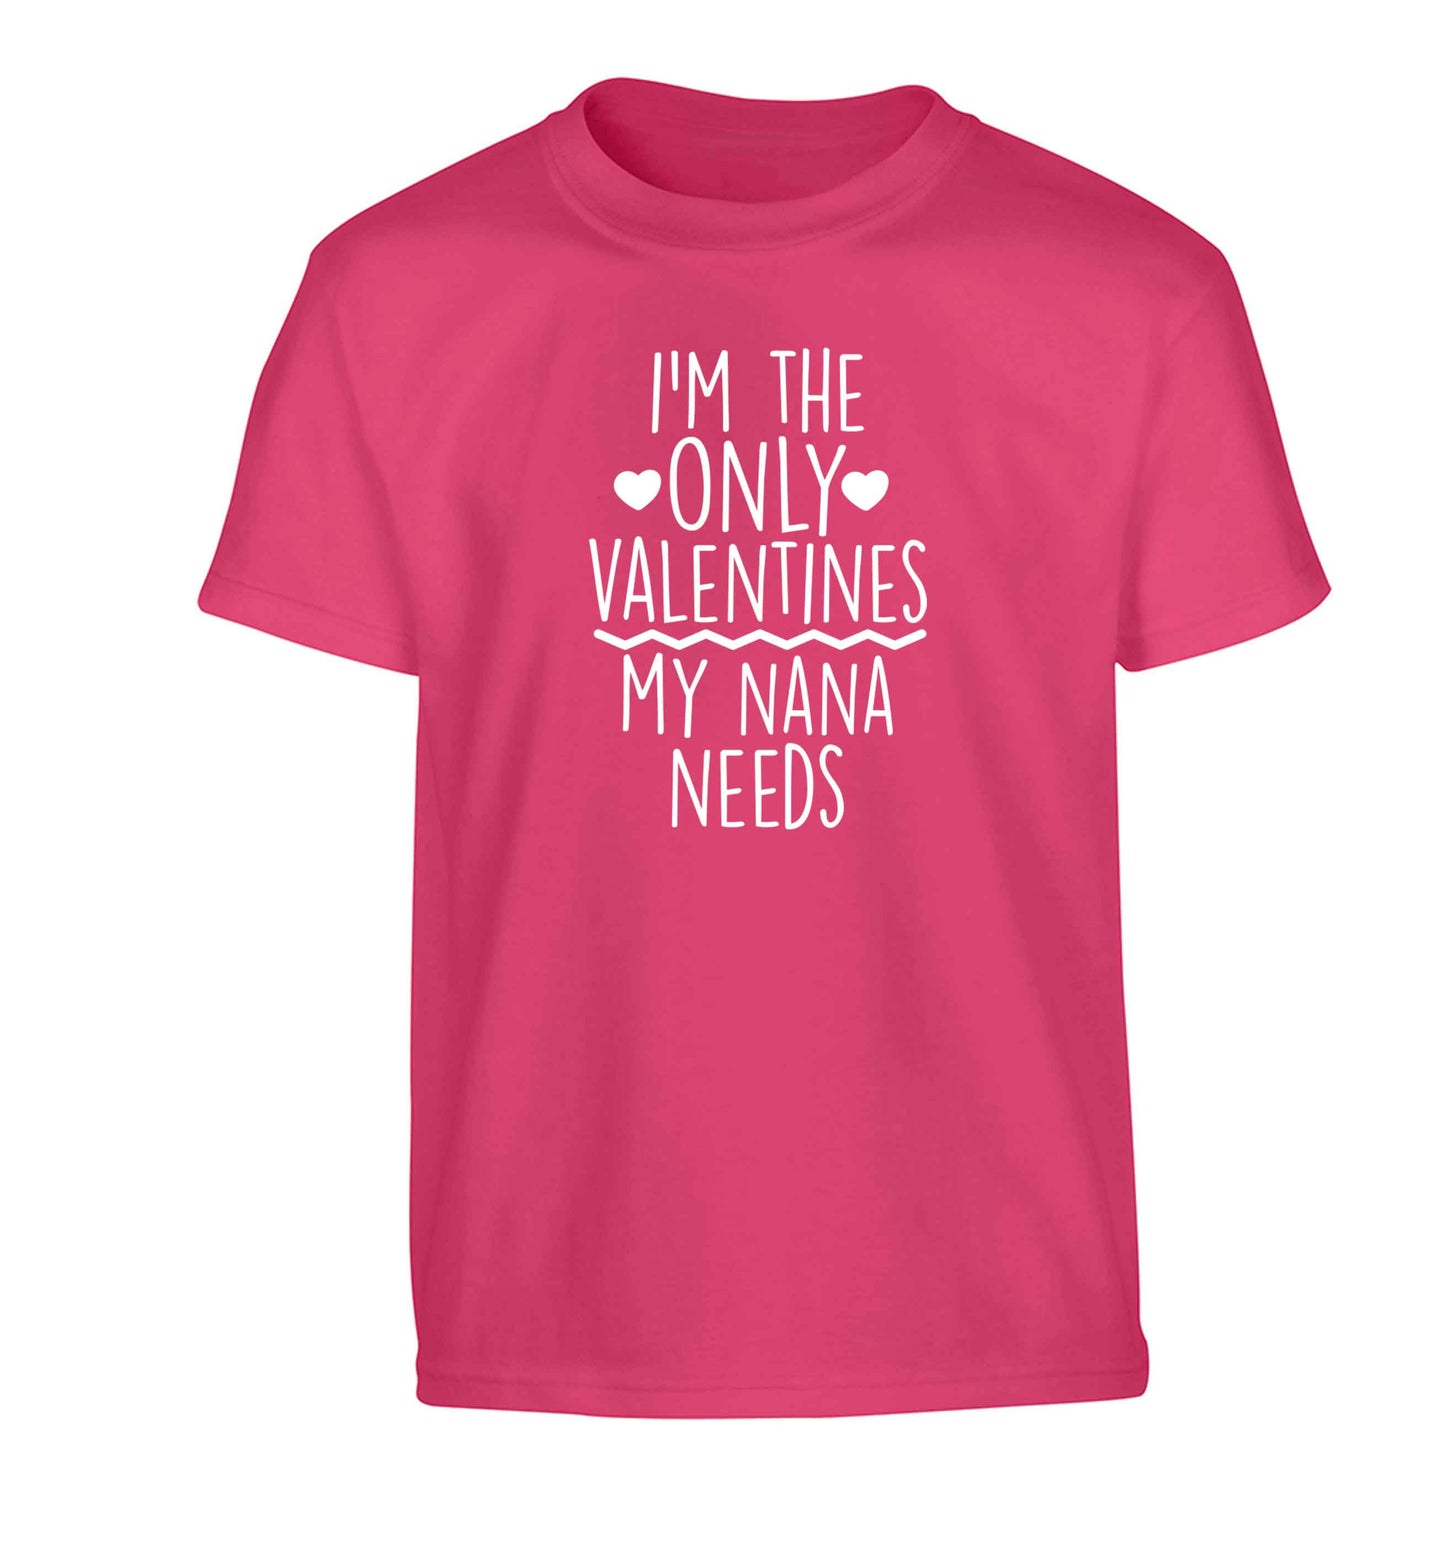 I'm the only valentines my nana needs Children's pink Tshirt 12-13 Years